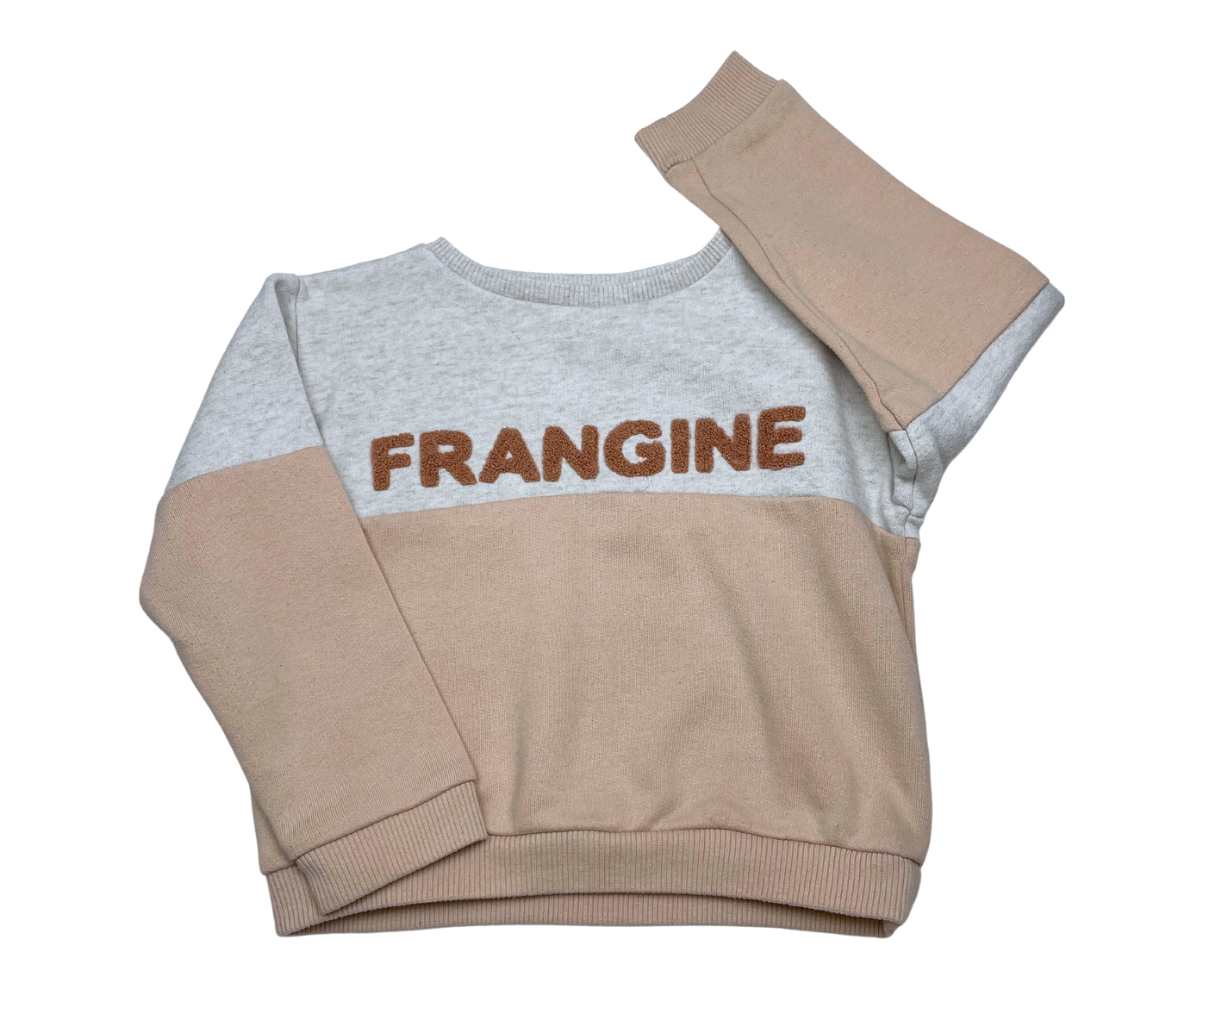 FRANGIN FRANGINE - Sweat "frangine" - 4 ans